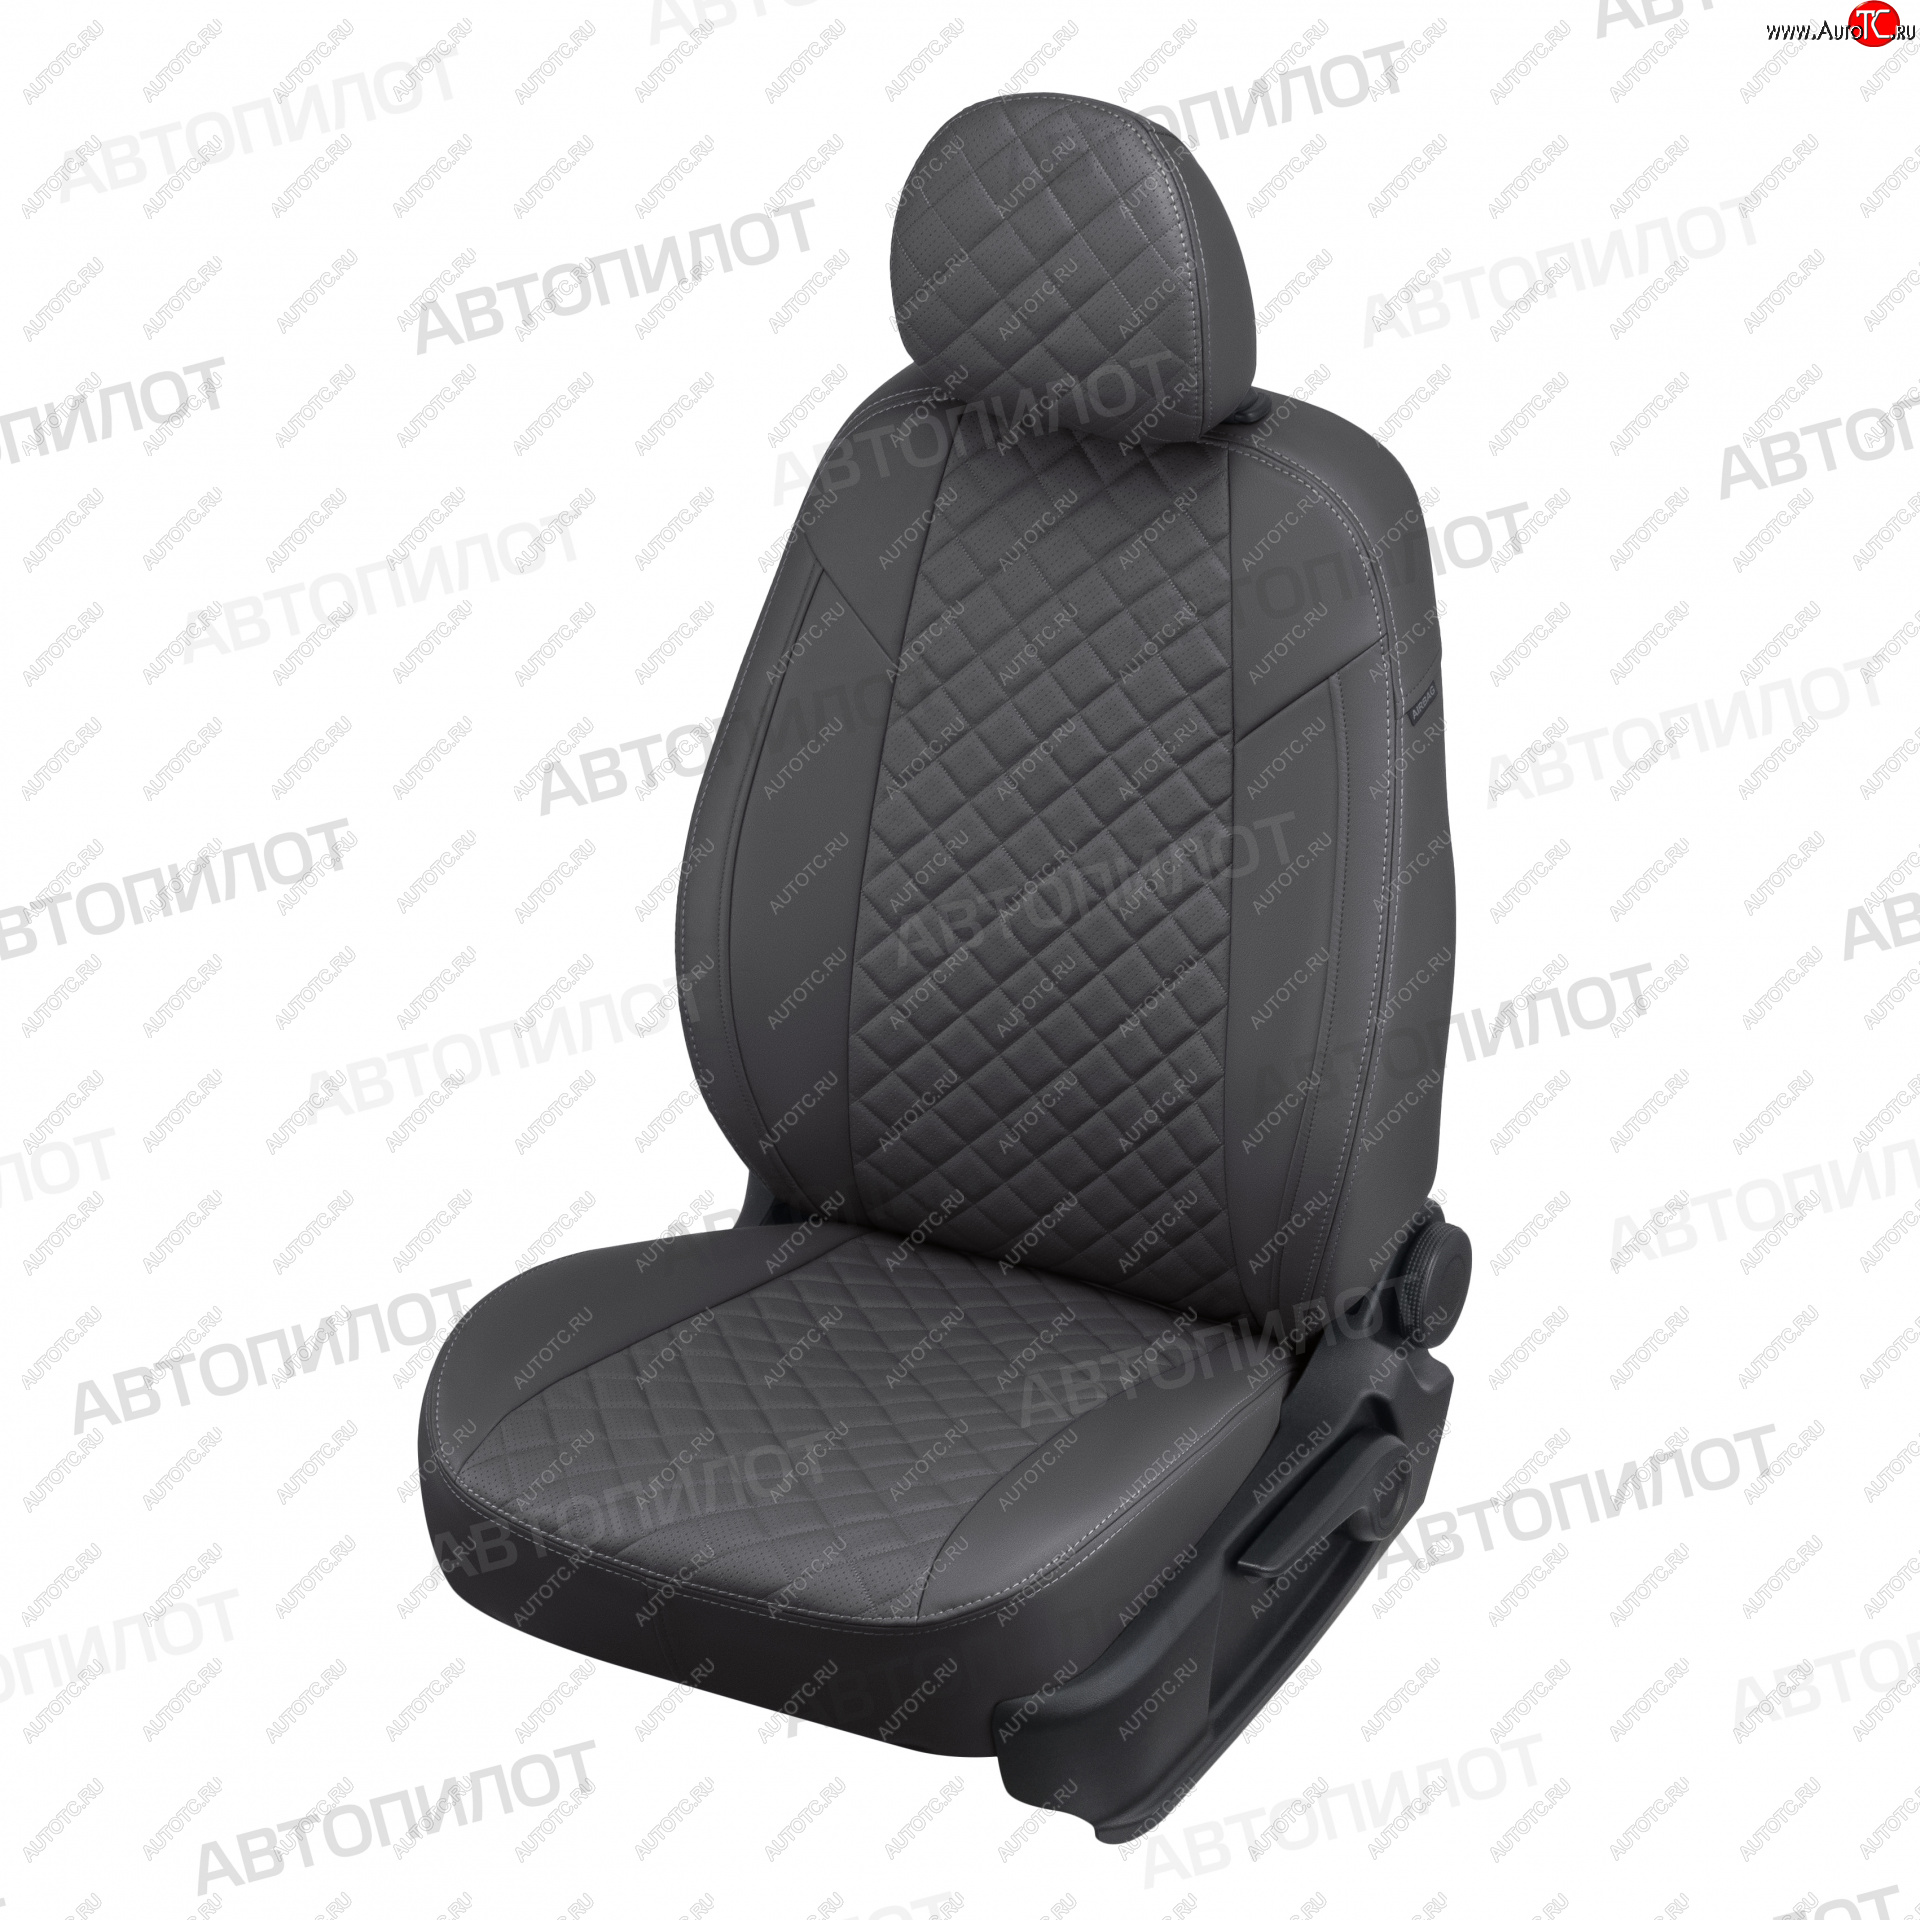 13 999 р. Чехлы сидений (экокожа, спл./п.кресла Спорт) Автопилот Ромб  BMW 3 серия  E46 (1998-2005) (темно-серый)